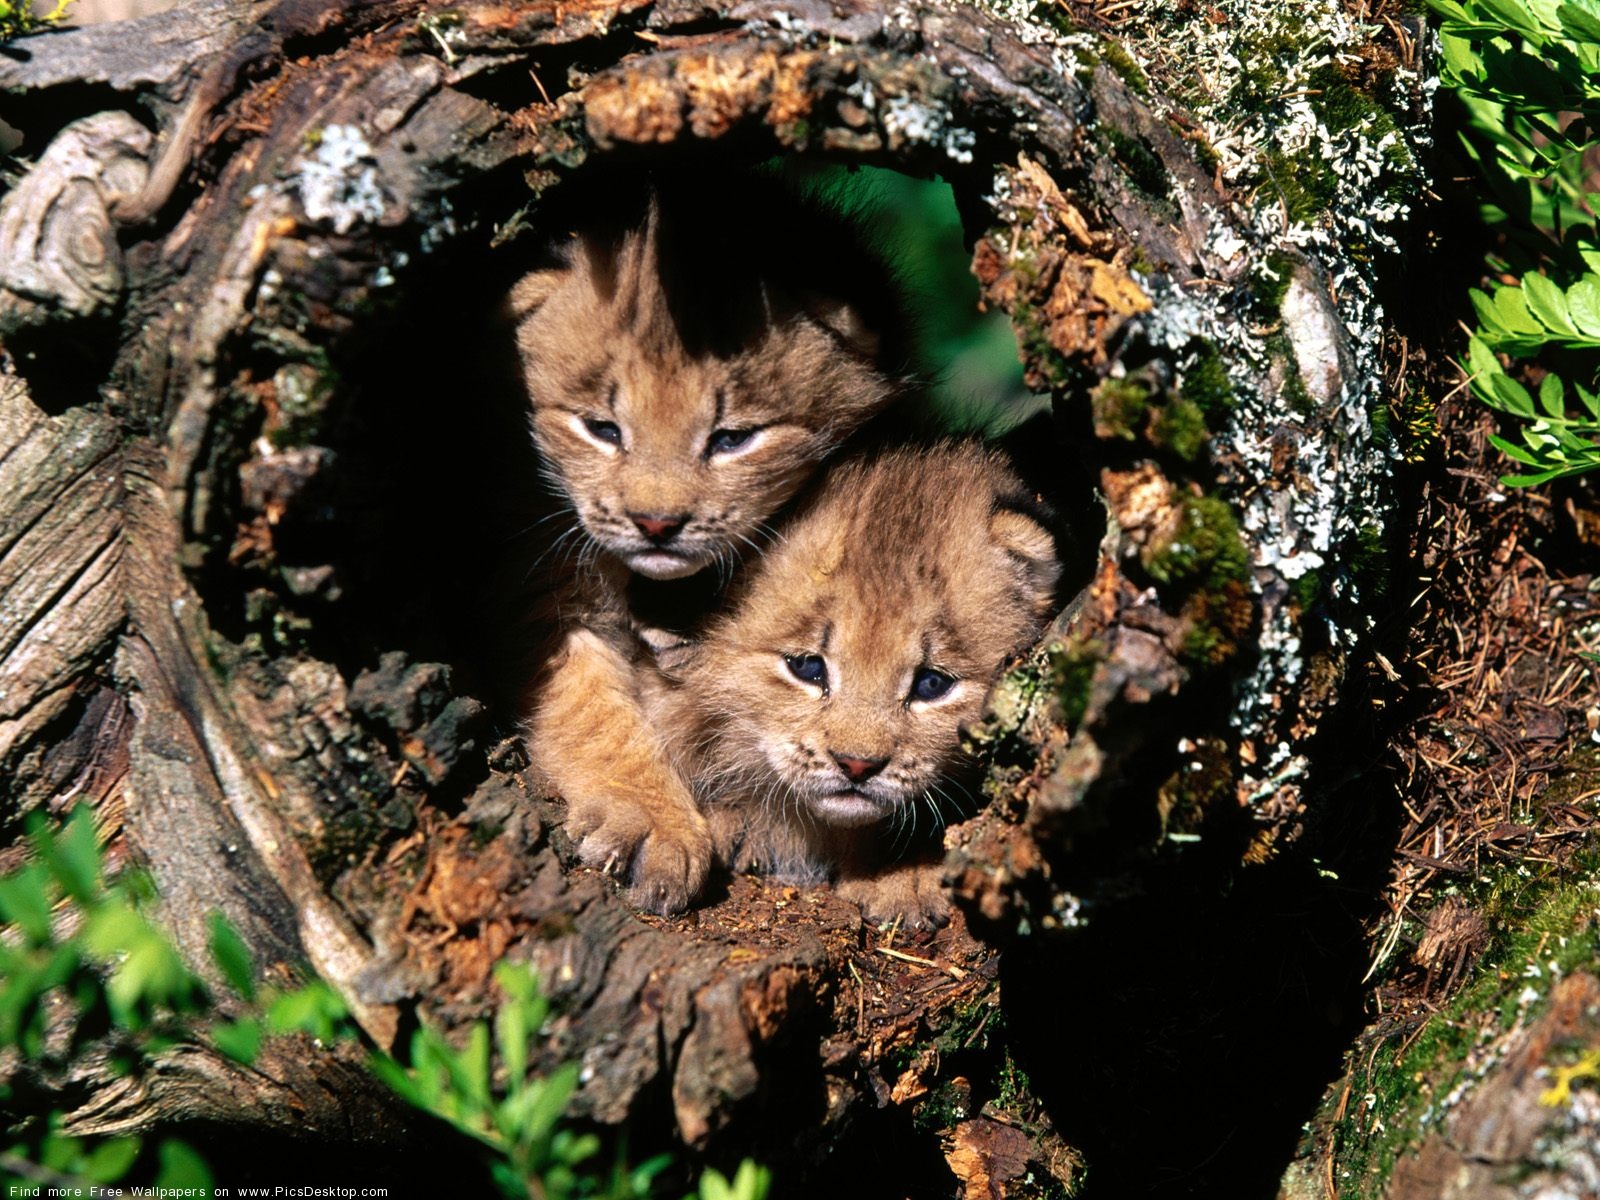 The Little Wild Kitty Animal Desktop Wallpaper Picture